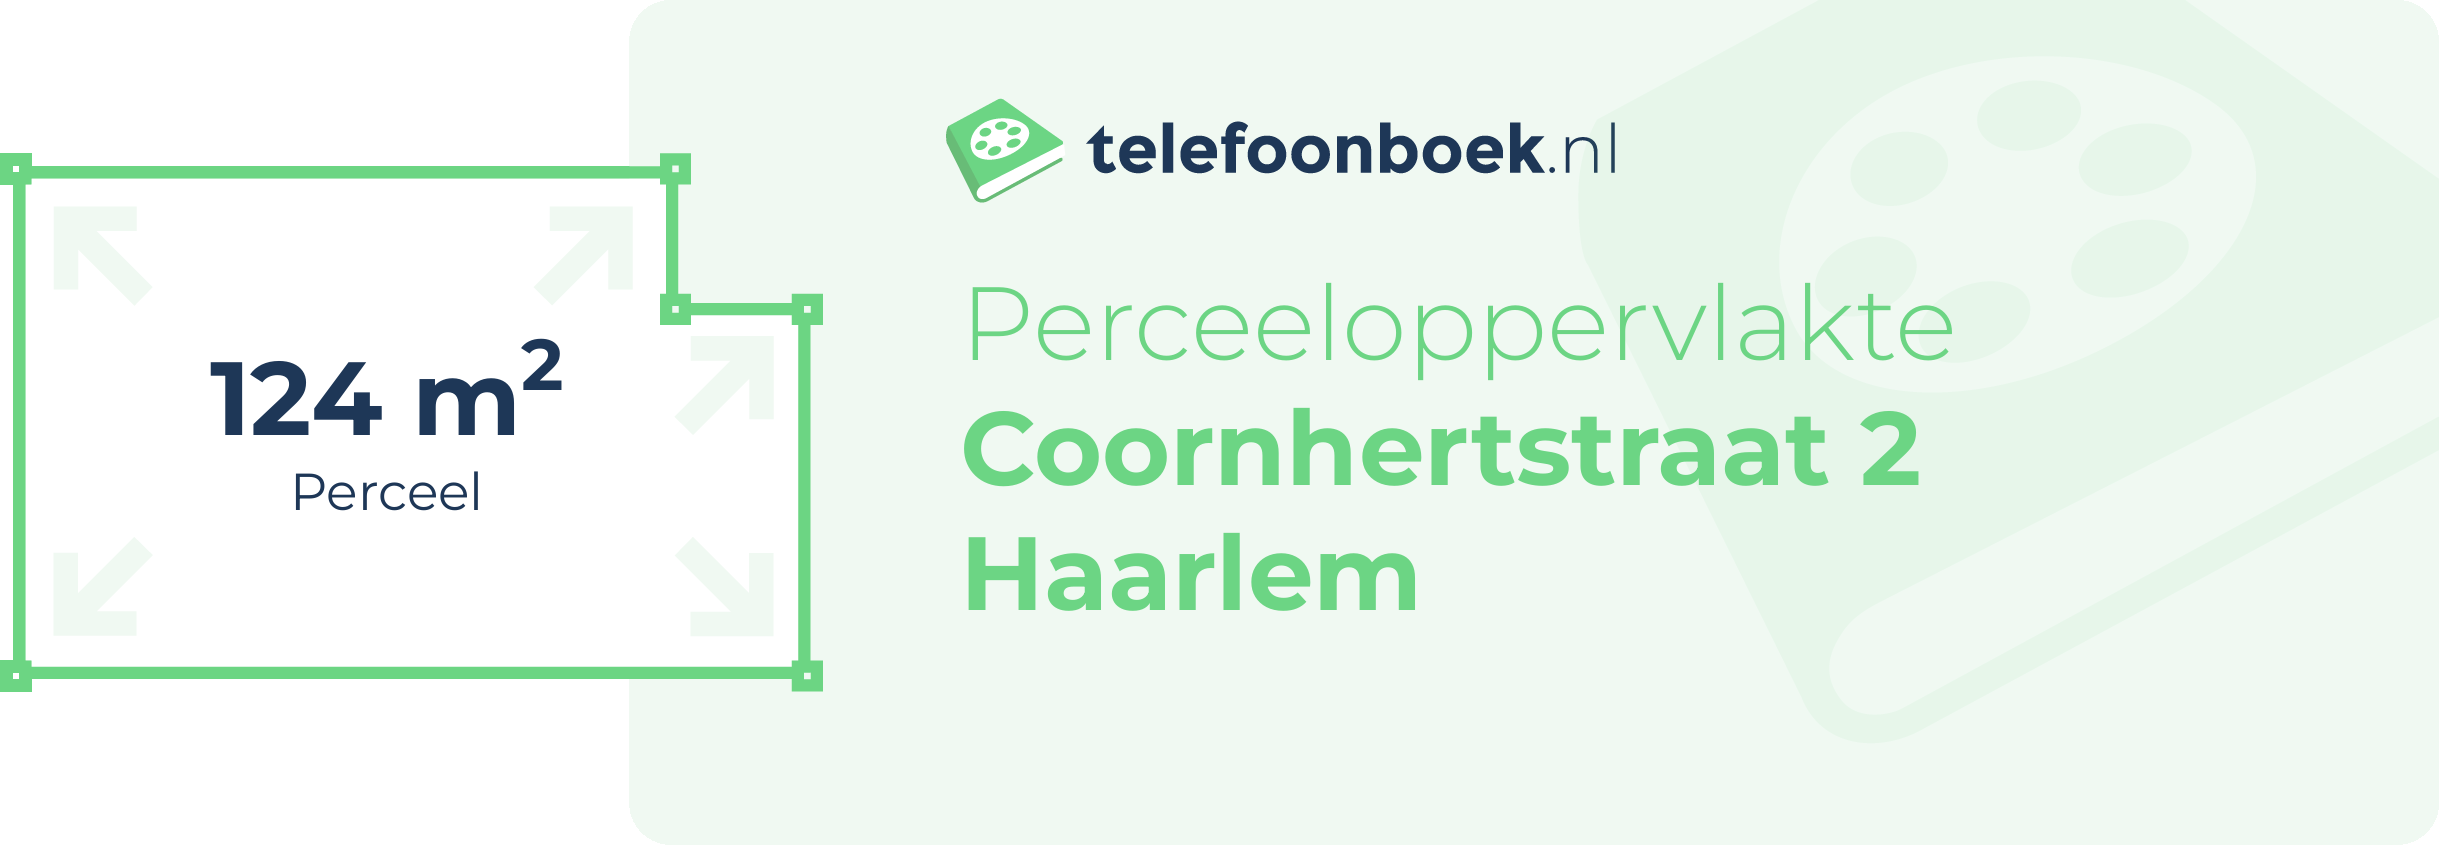 Perceeloppervlakte Coornhertstraat 2 Haarlem